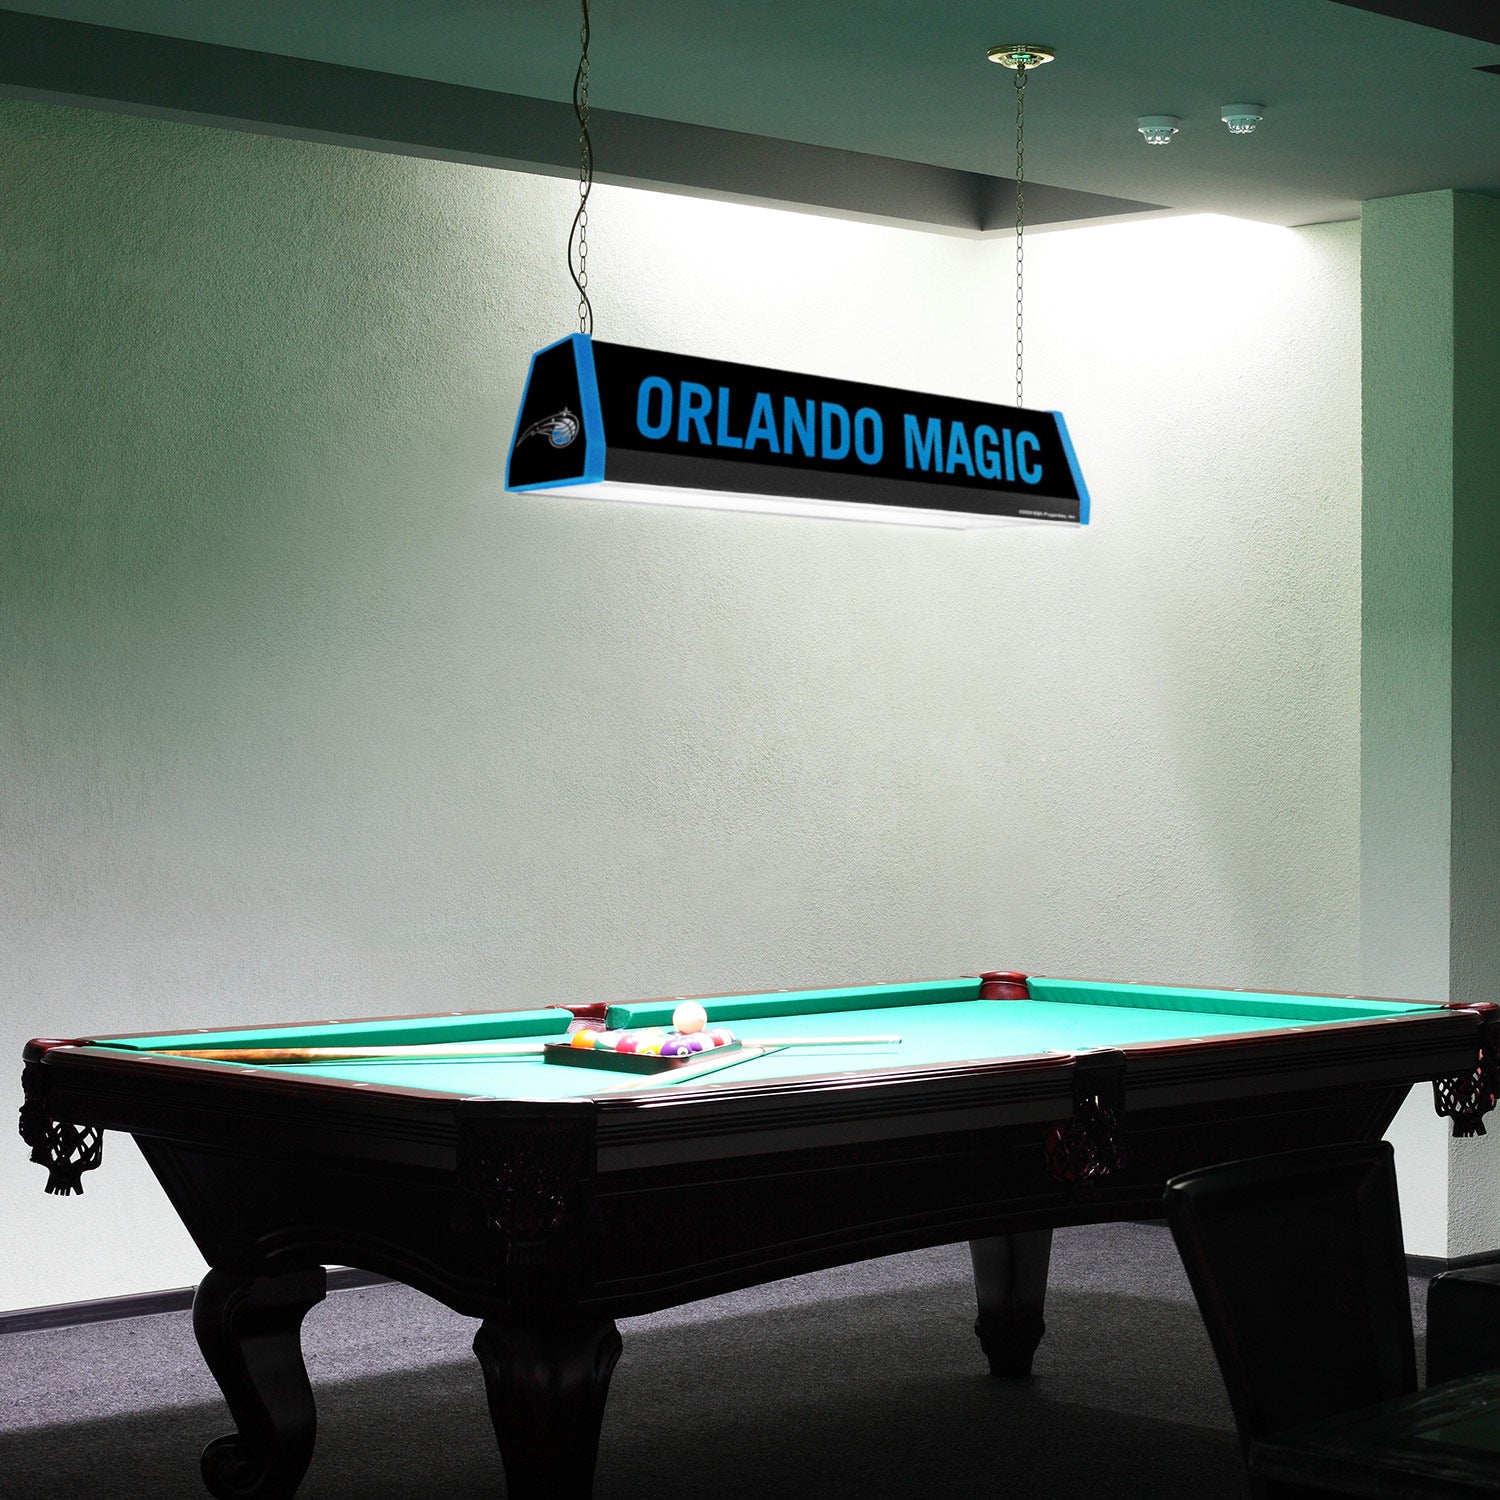 Orlando Magic Standard Pool Table Light Room View